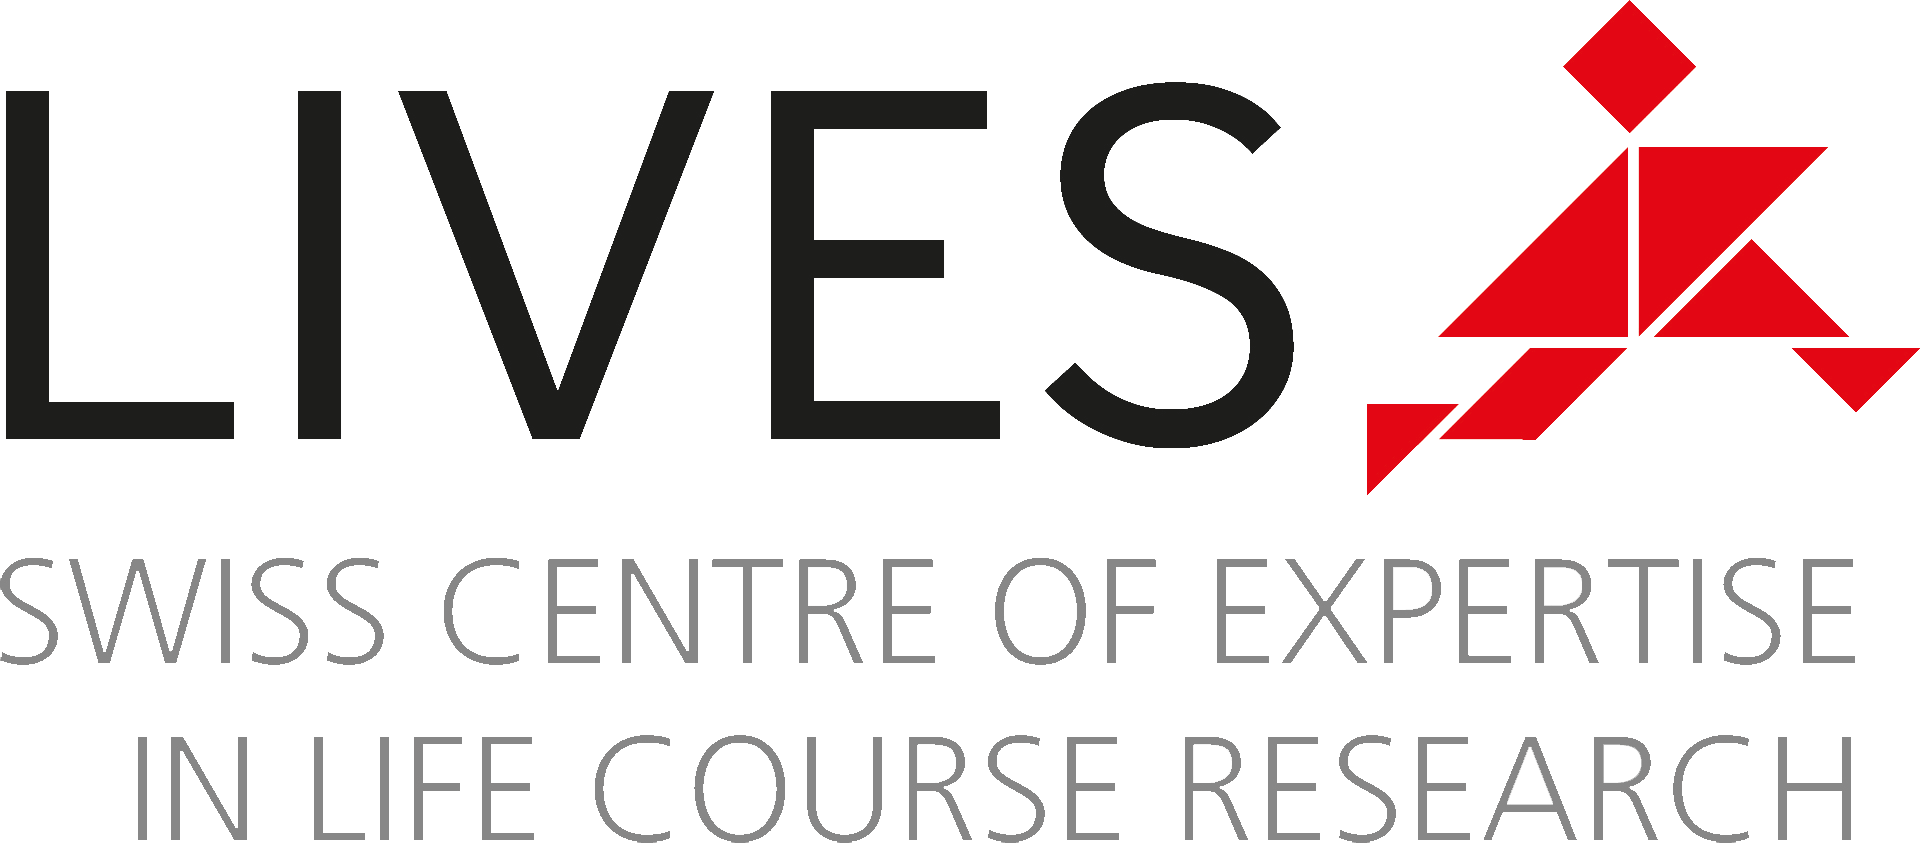 LIVES logo